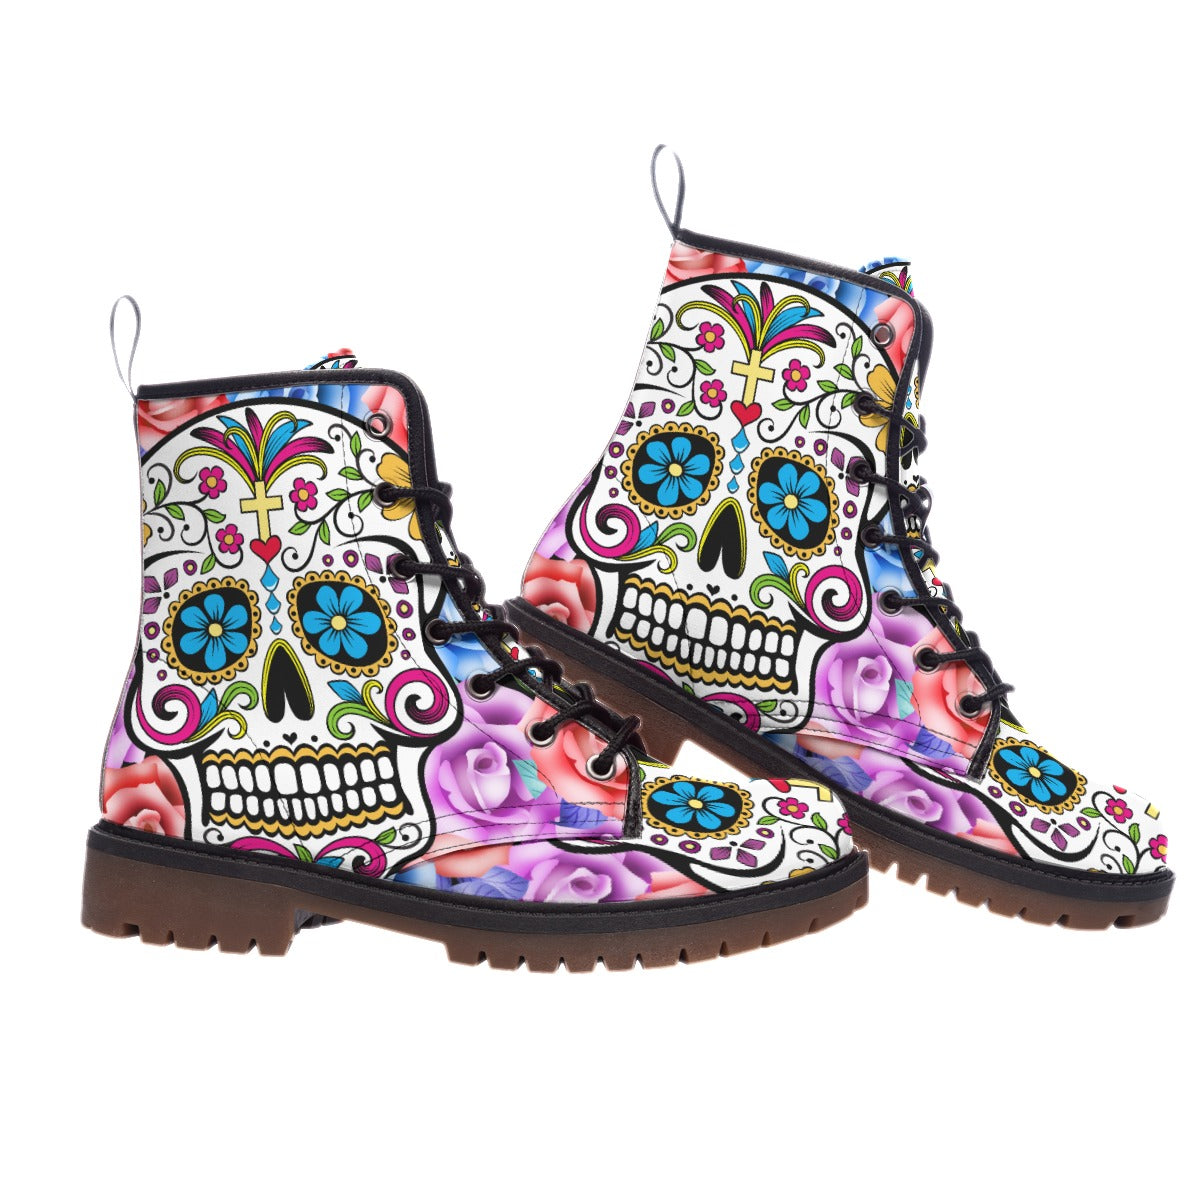 Dia de los muertos sugar skull Boots, Gothic day of the dead boots shoes for men women